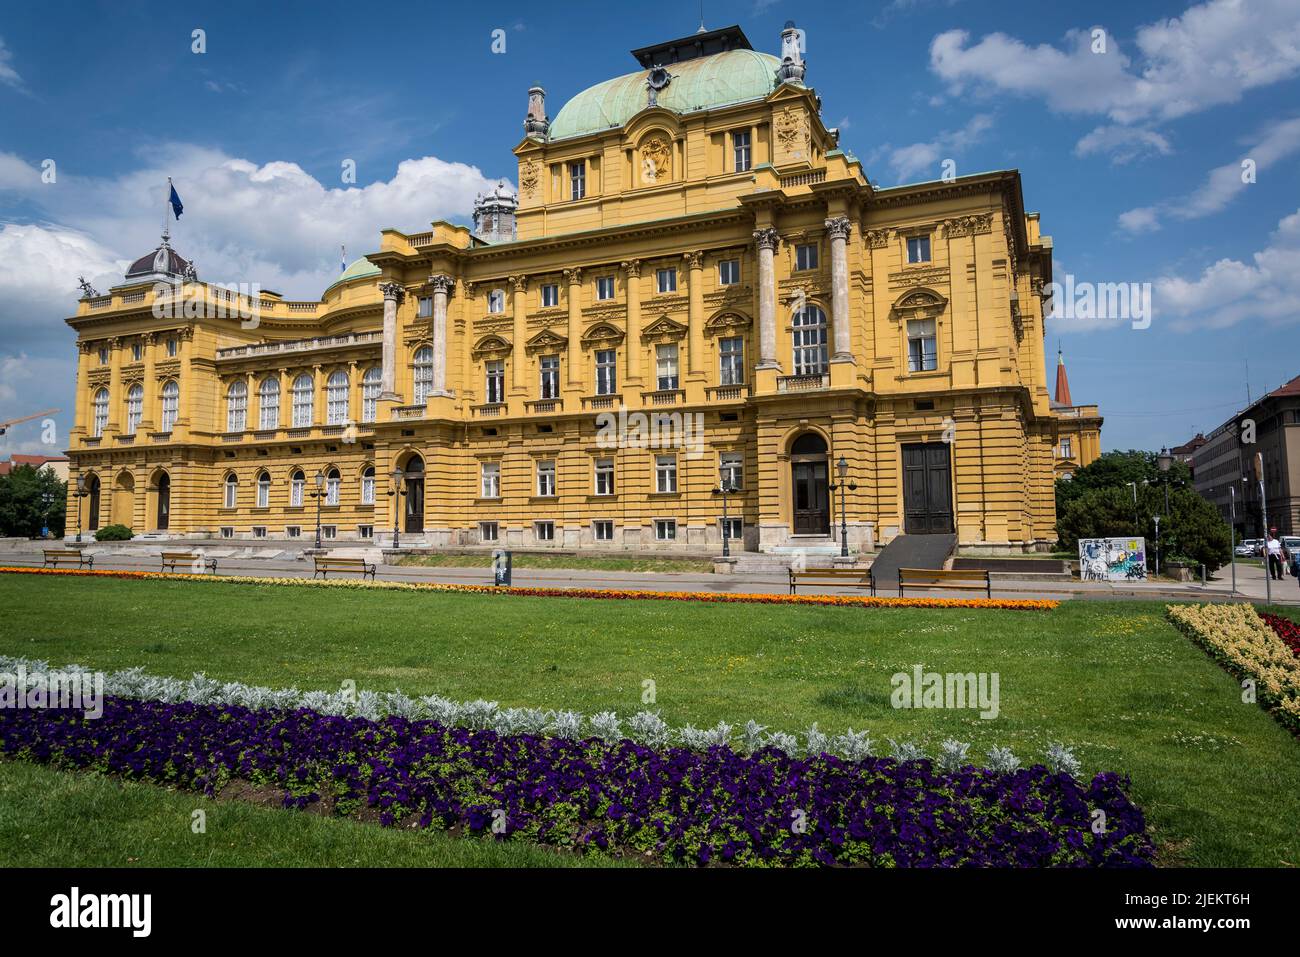 Croatian National Theatre, late 19th century building in Baroque Revival architecture style, Zagreb, Croatia Stock Photo